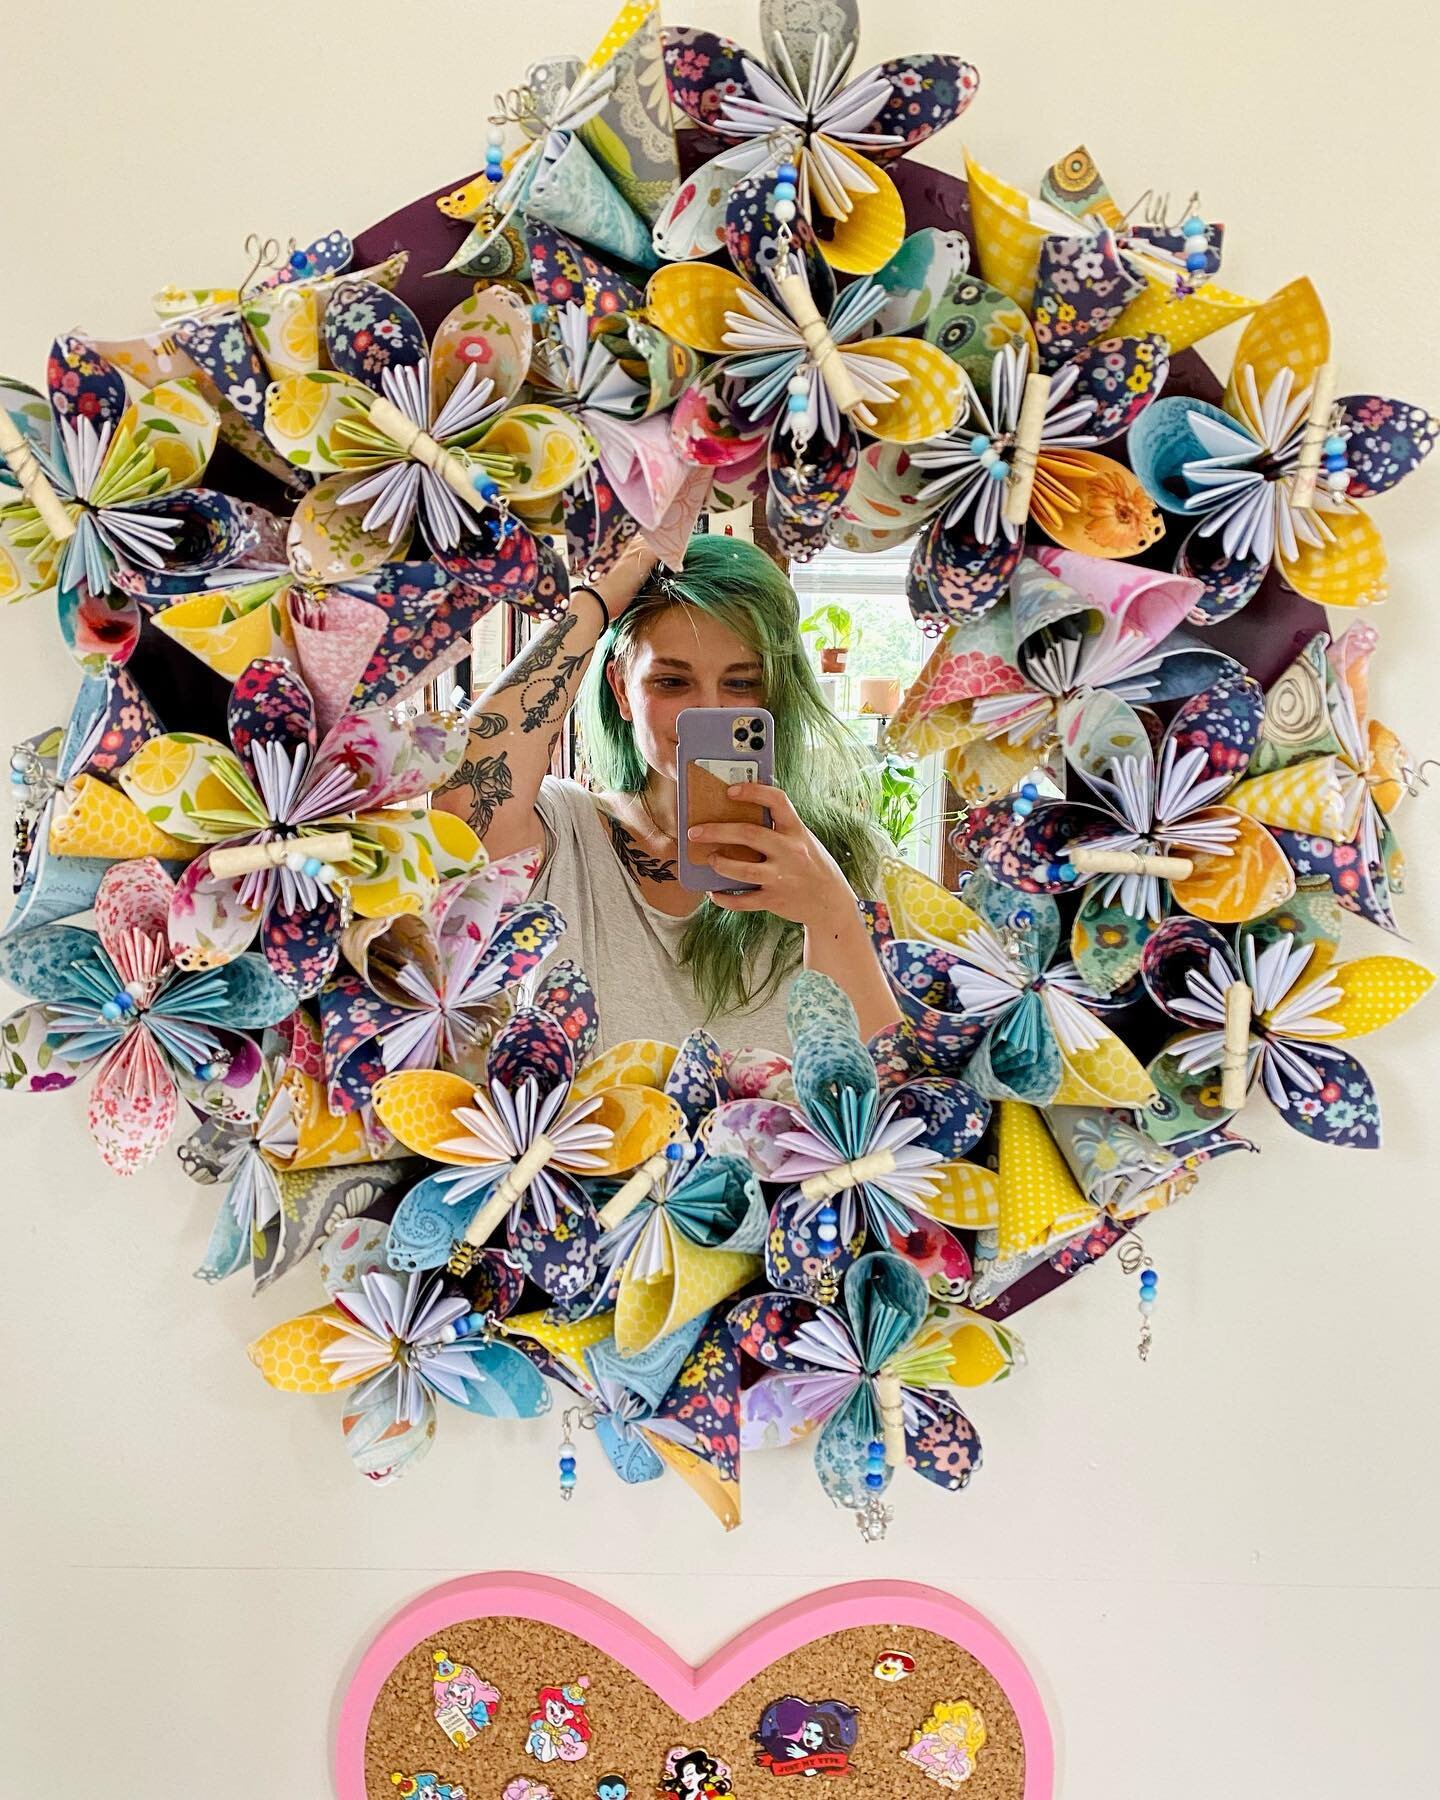 A BEAUTIFUL handmade mirror made by my lovely mama, @dreamtreestudiodot , i get all my creativity from her!!🌸🪴💐

#origami #origamipaper #origamiflowers #handmadewithlove #custommirror #customcreations #artstudio #artiststudio #studiotour #studiose